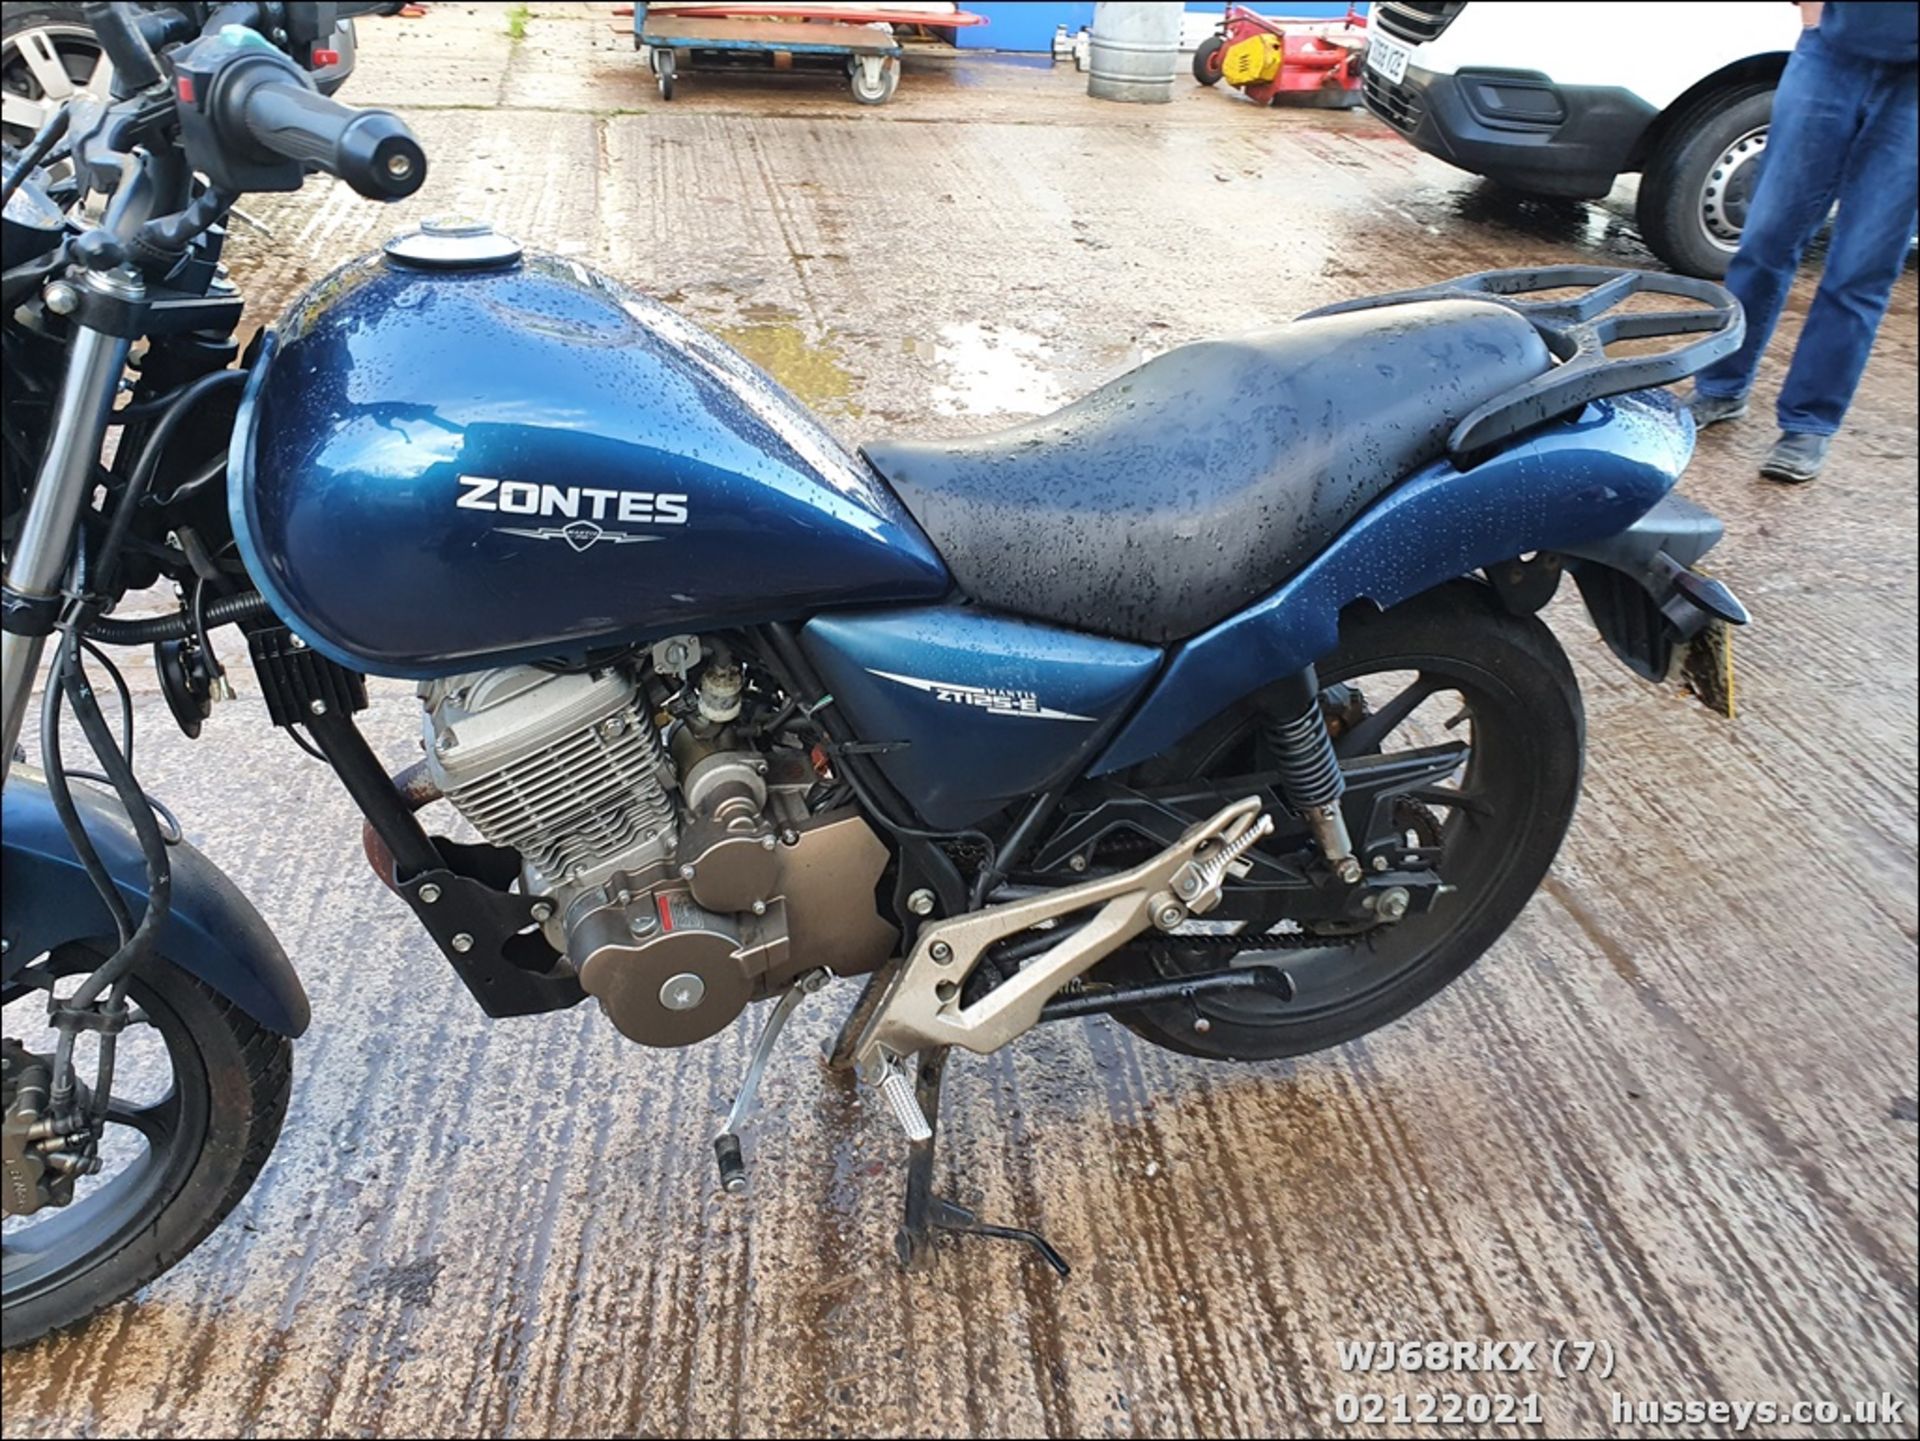 18/68 ZONTES MANTIS - 124cc Motorcycle (Blue, 3k) - Image 6 of 13